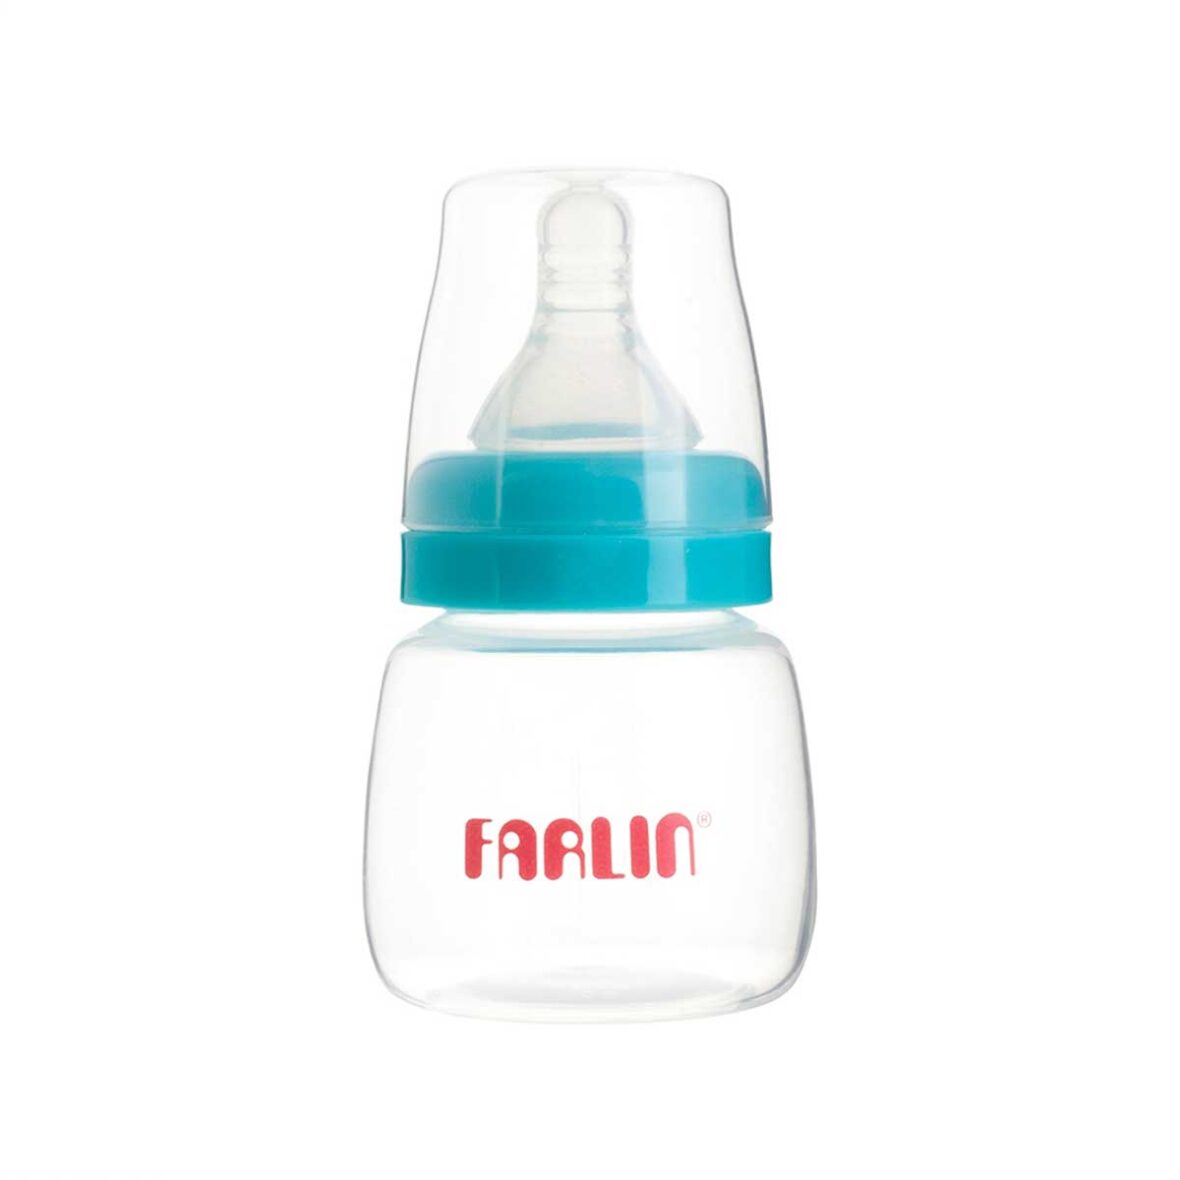 Plastic Farlin Feeding Bottle (60ml)